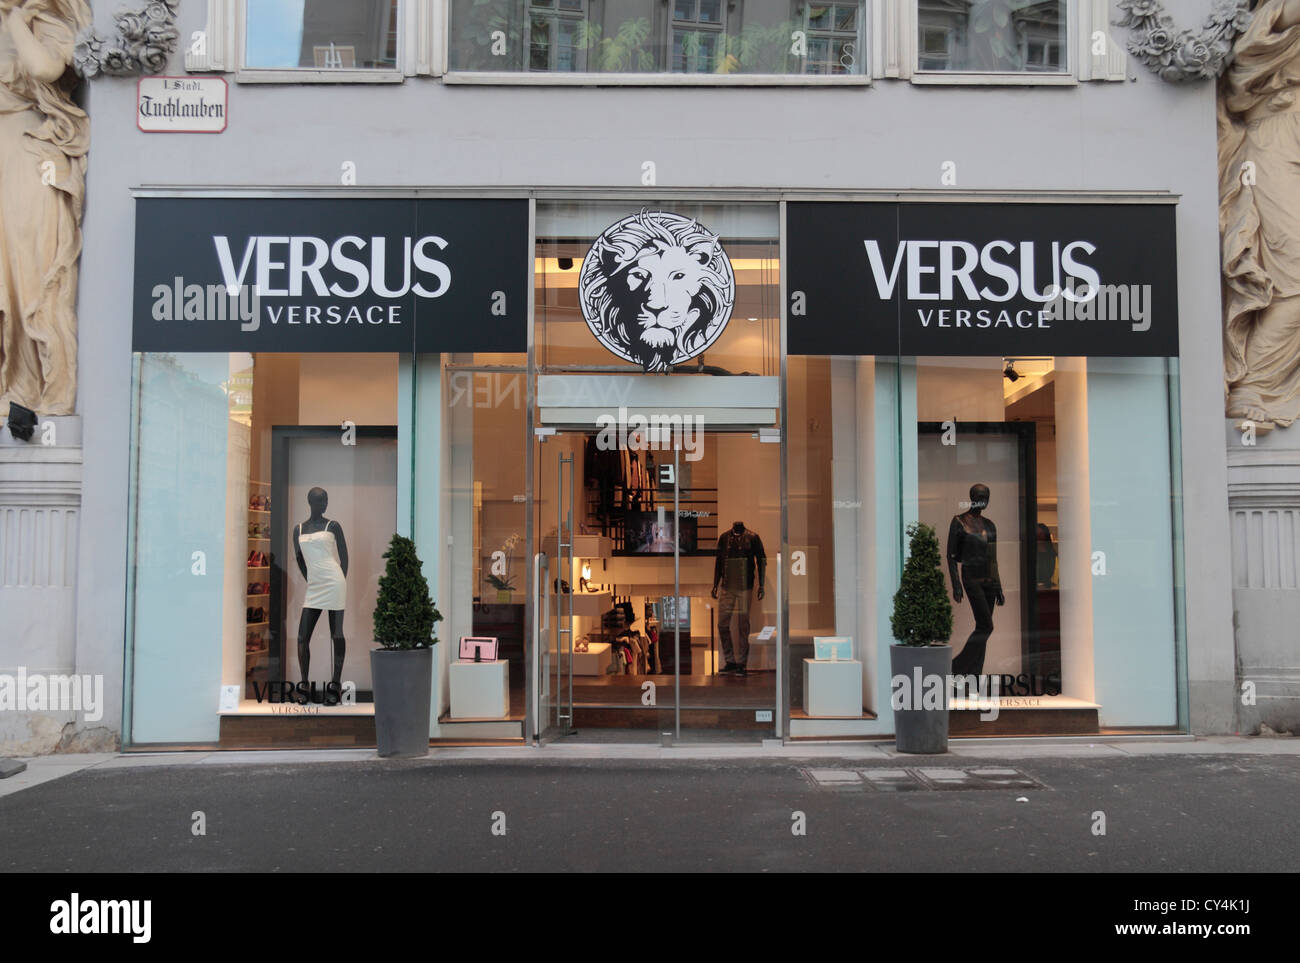 Versus Versace High Resolution Stock 